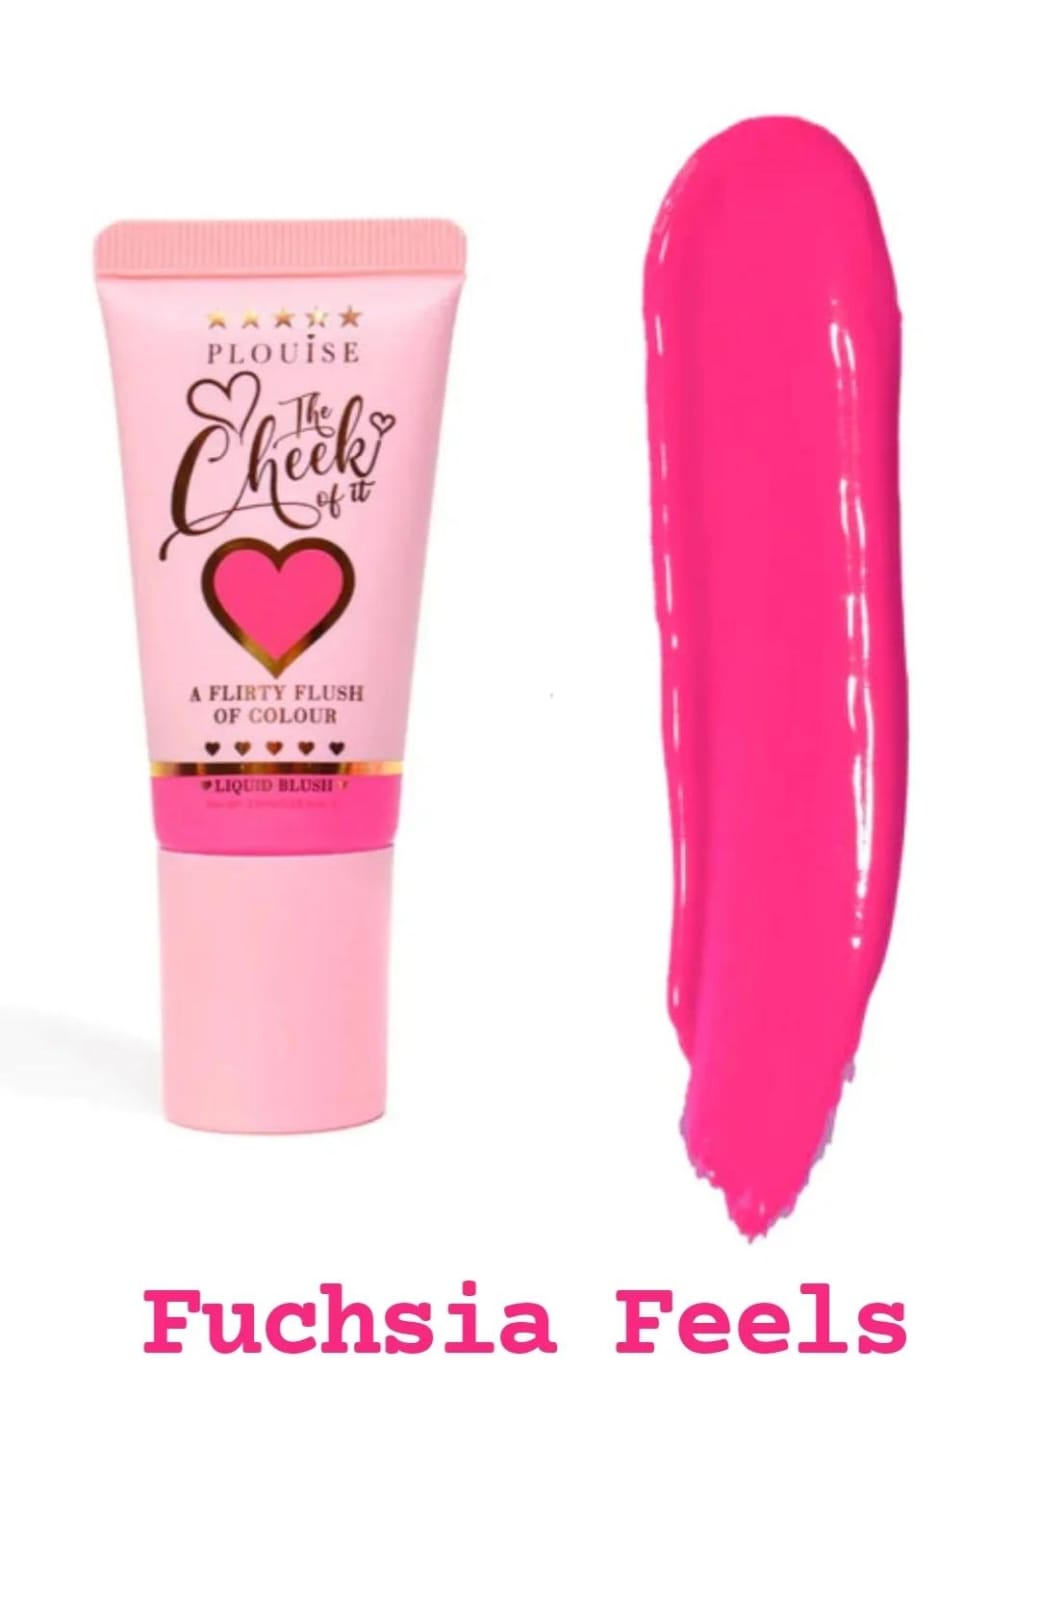 Plouise The Cheek of it - Liquid Blush